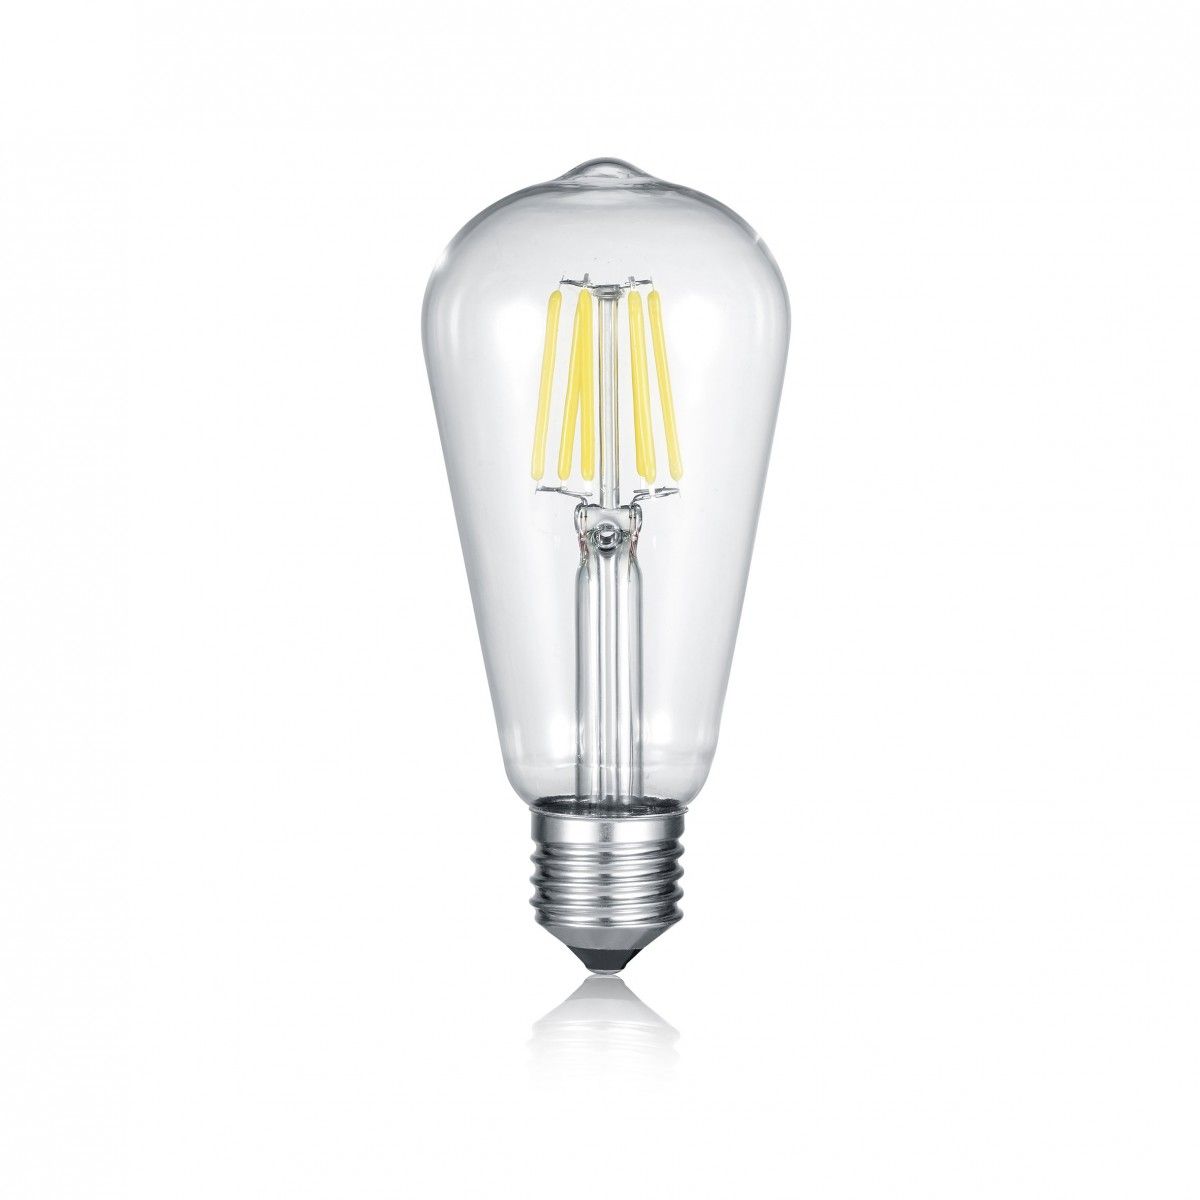 Trio 987-600 designová LED žárovka Kolben 1x6W | E27 | 600lm | 3000K - A-LIGHT s.r.o.